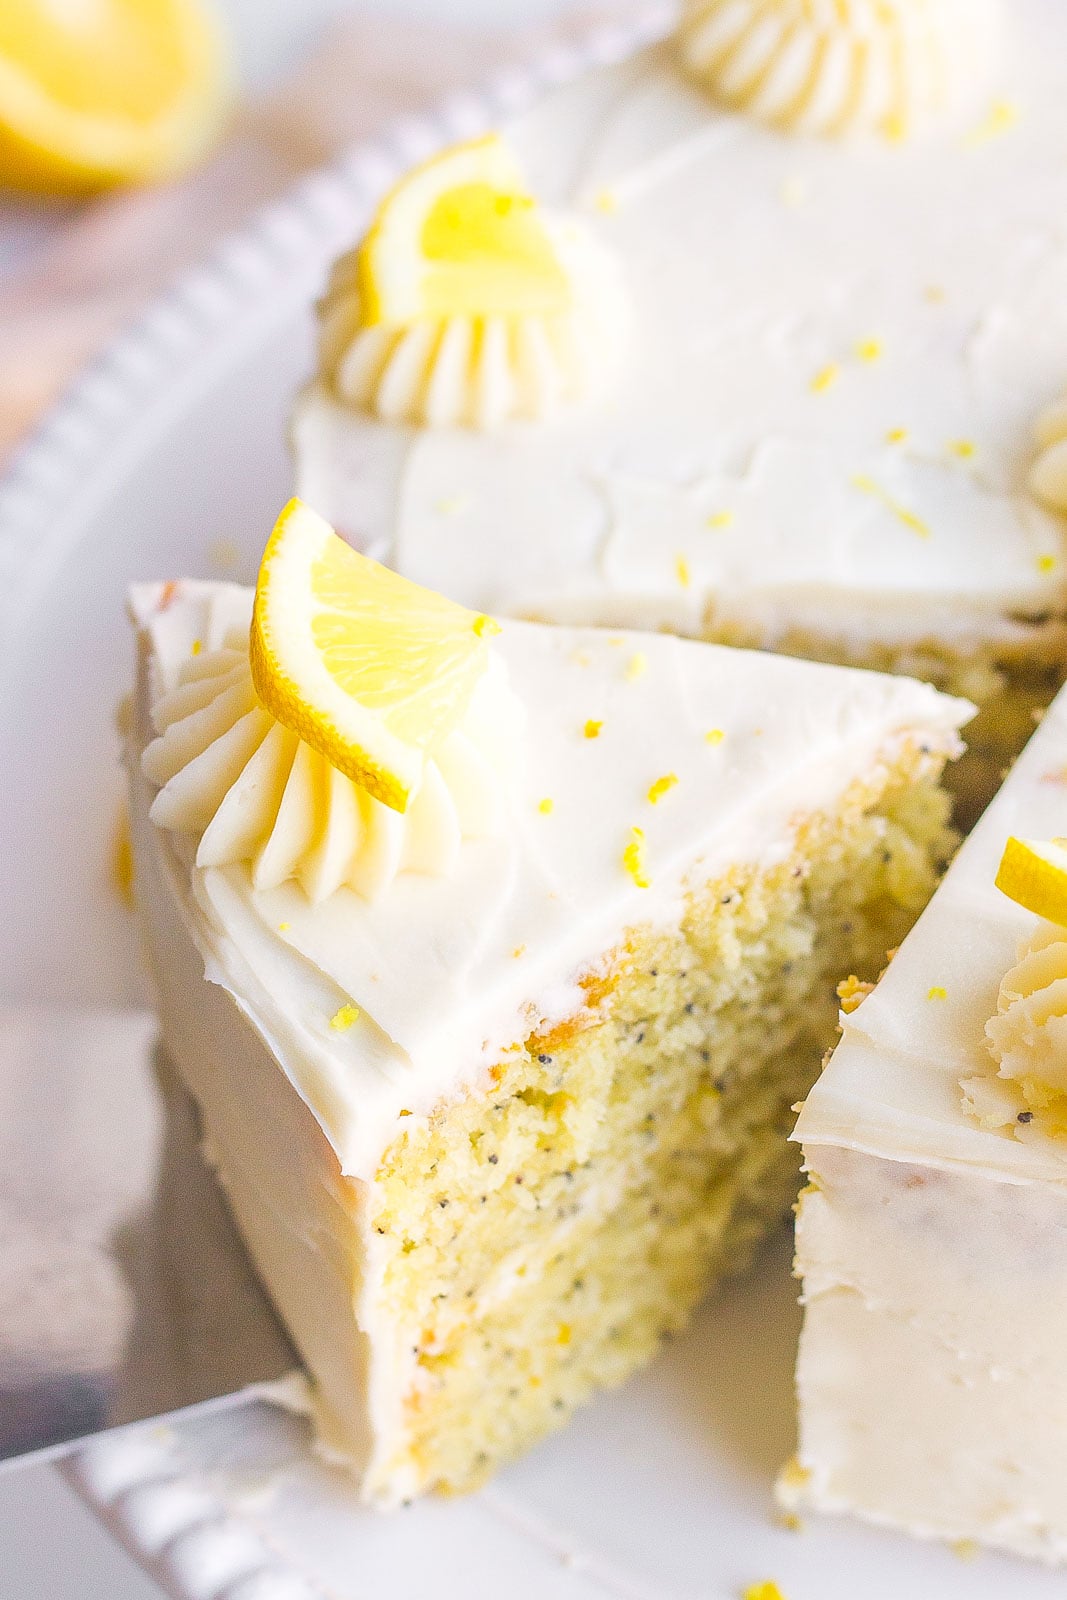 slice of cake with lemon slice on top